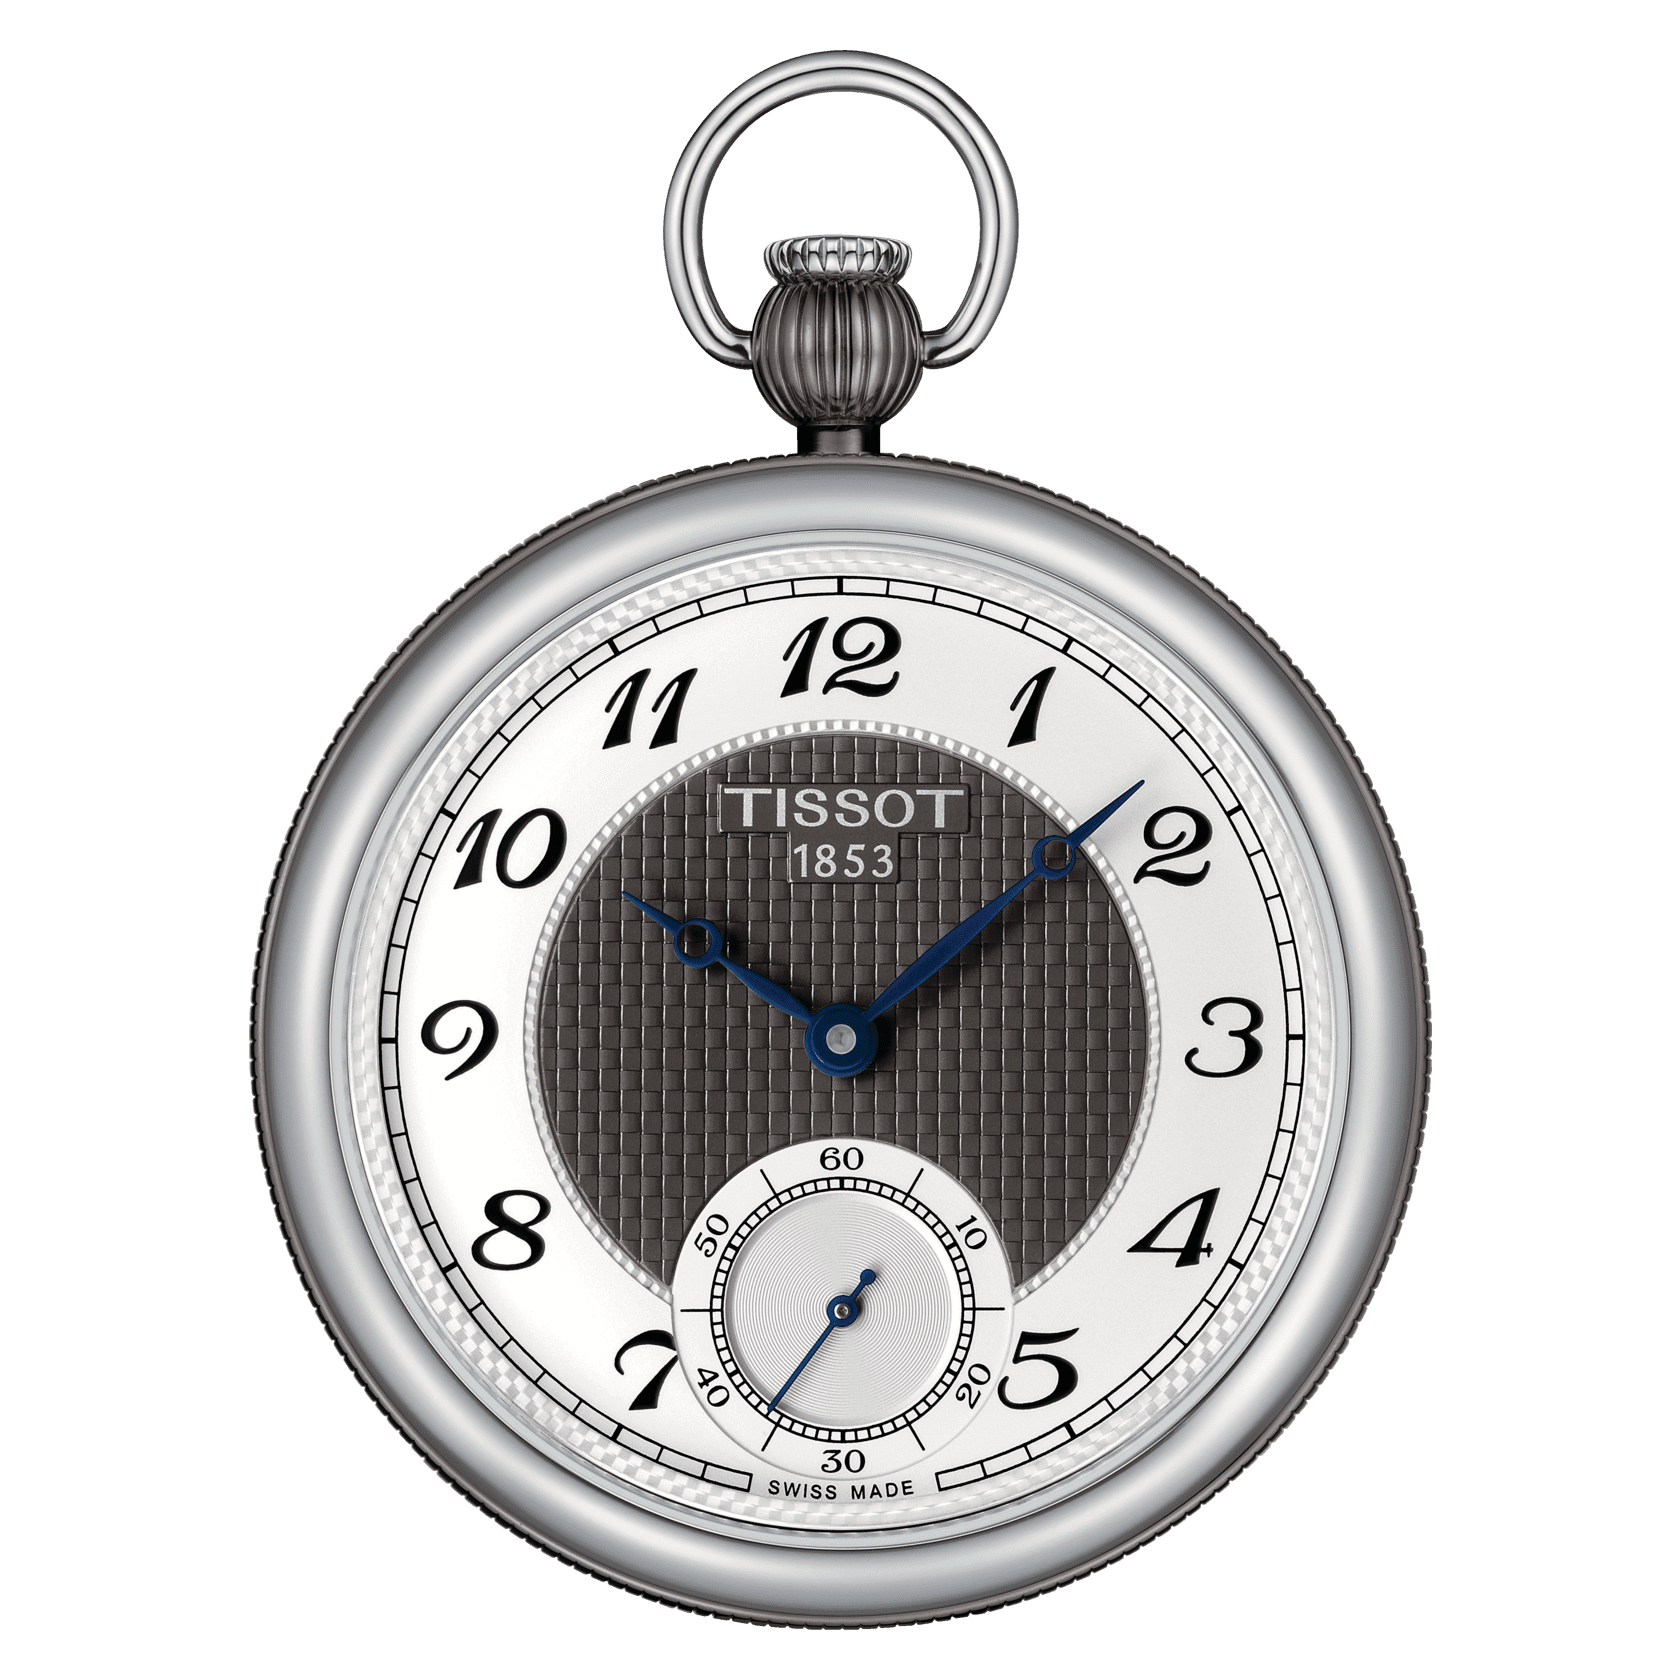 Replicas Montblanc Watch